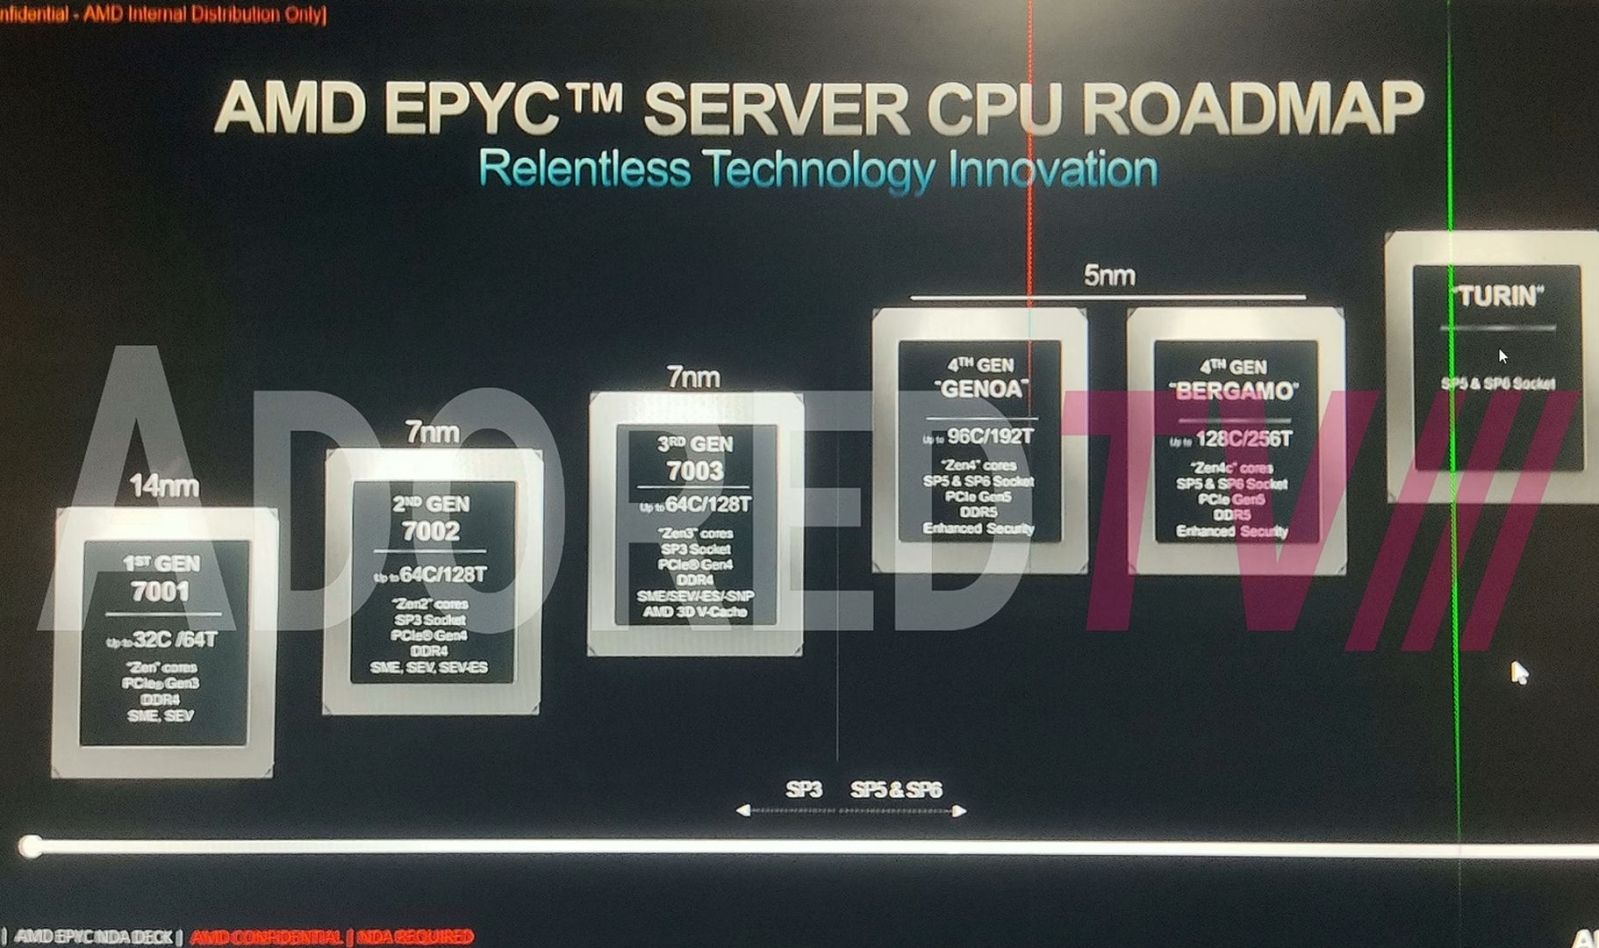 AMD-EPYC-GENOA-TURING-SP5-SP6-1-1.jpg